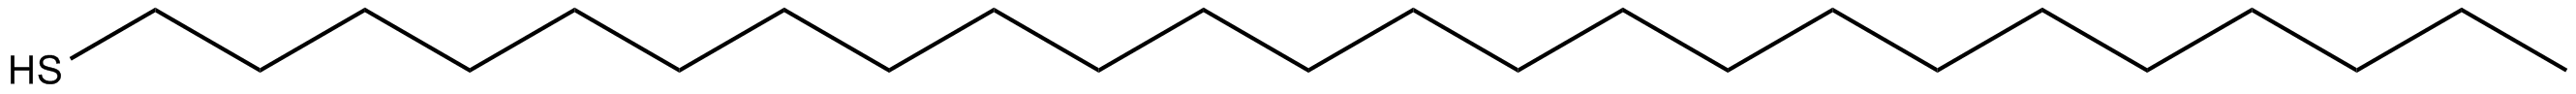 Image of 1-tetracosanethiol